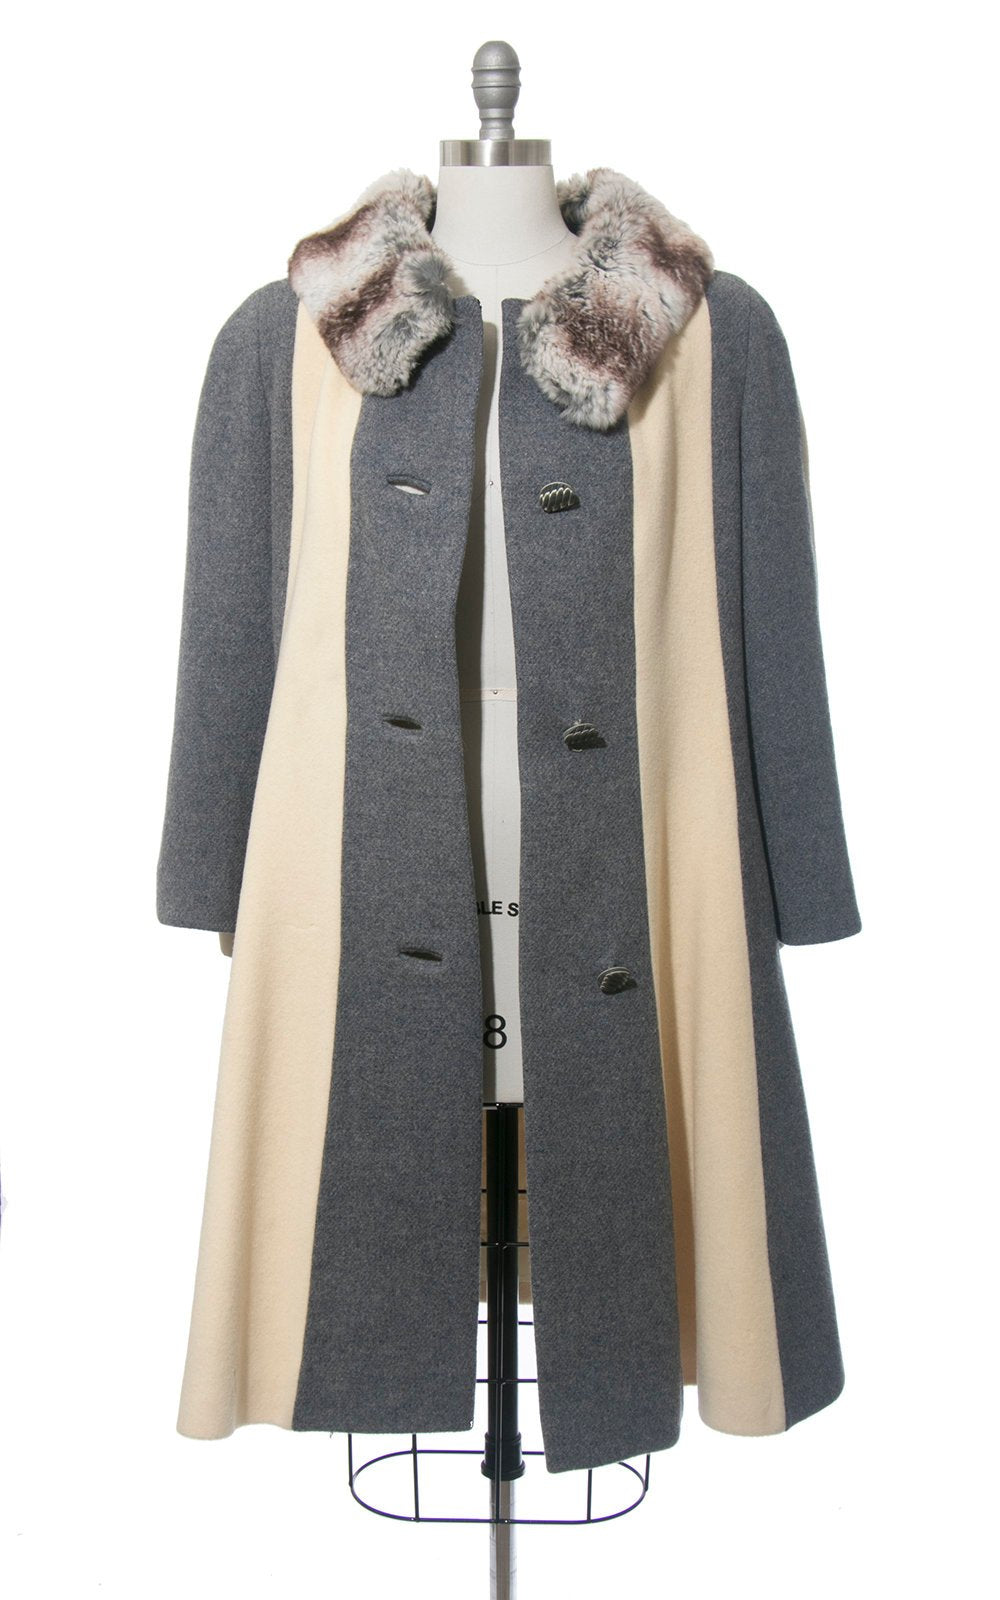 Vintage 1960s Coat | 60s LILLI ANN Fur Collar Striped Wool Princess Coat Grey Gray Cream Winter Swing Coat (medium/large)